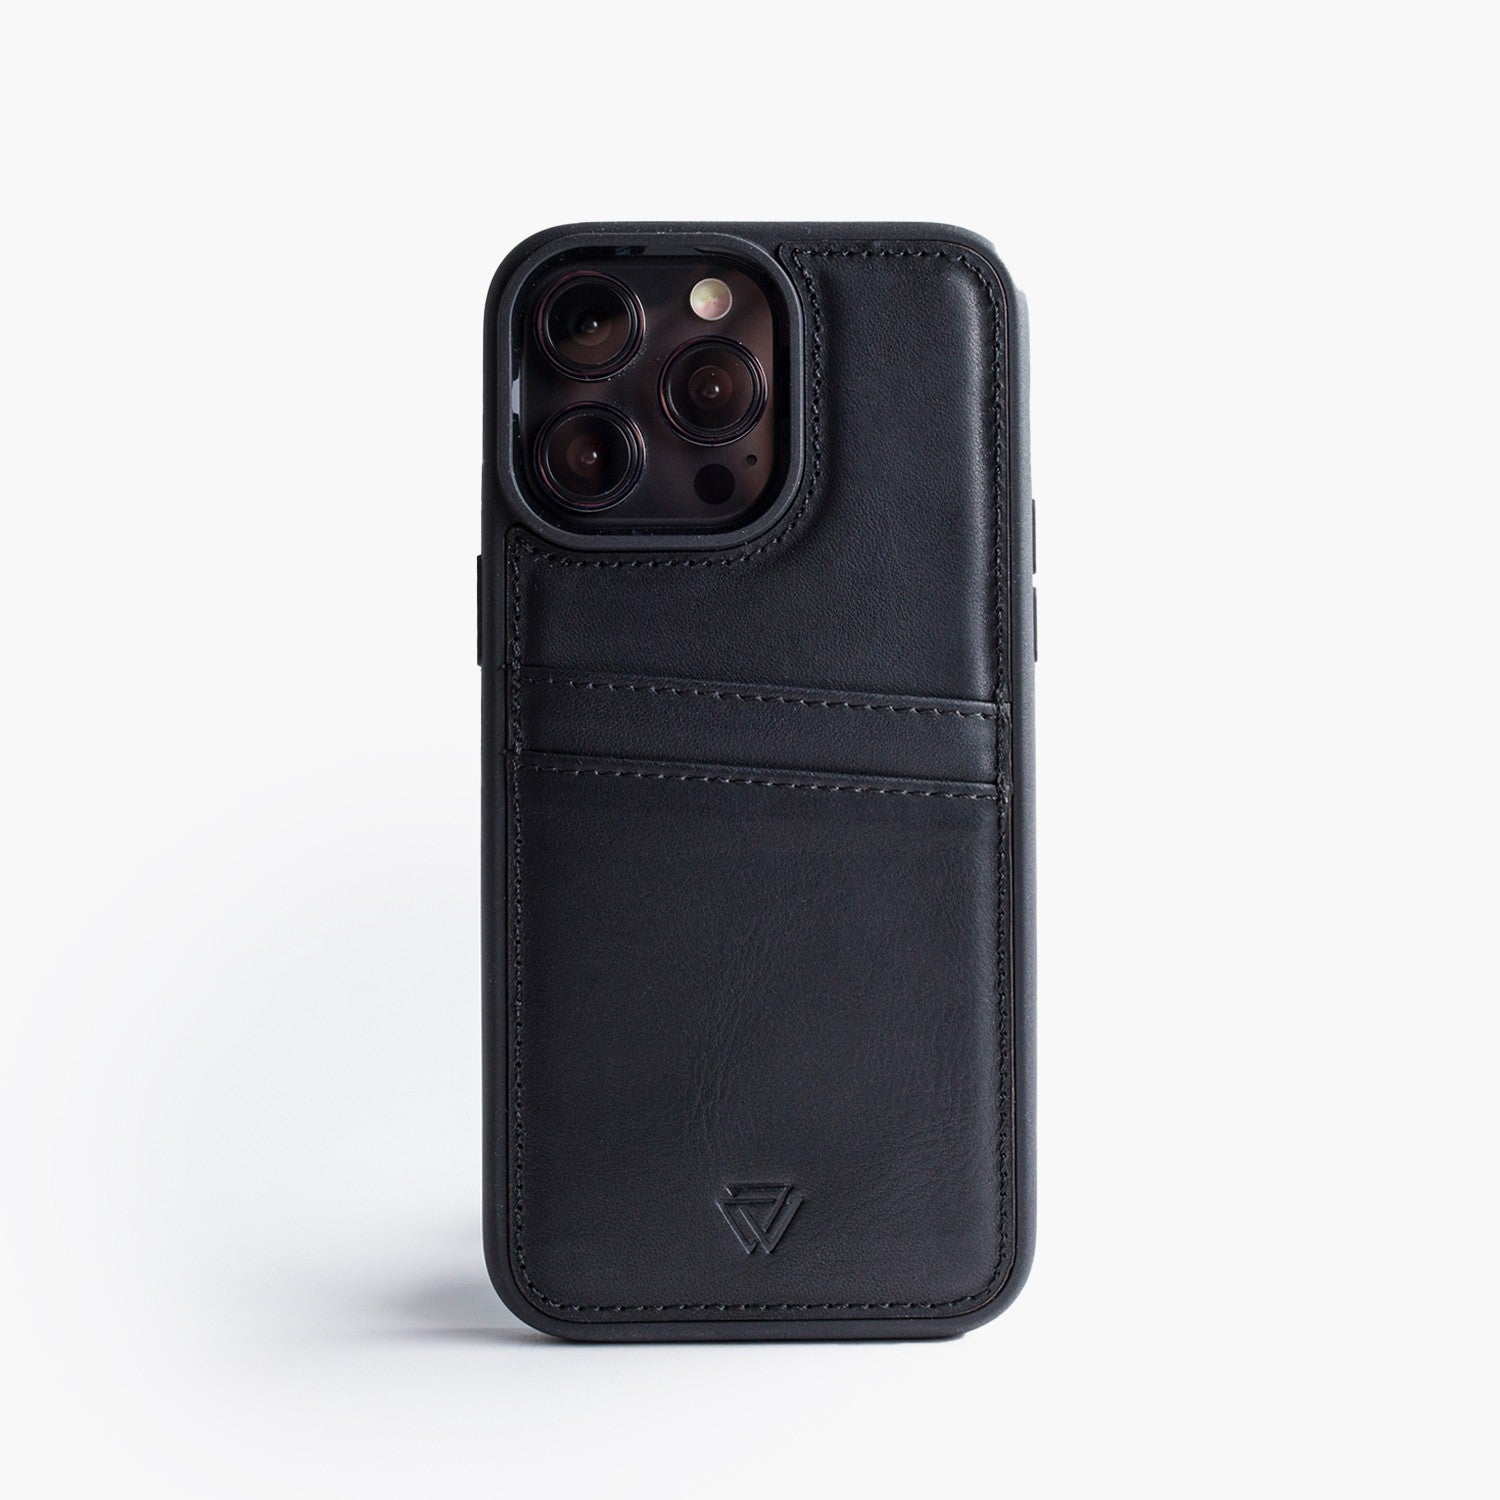 Wachikopa leather Back Cover C.C. Case for iPhone 12 Mini Black